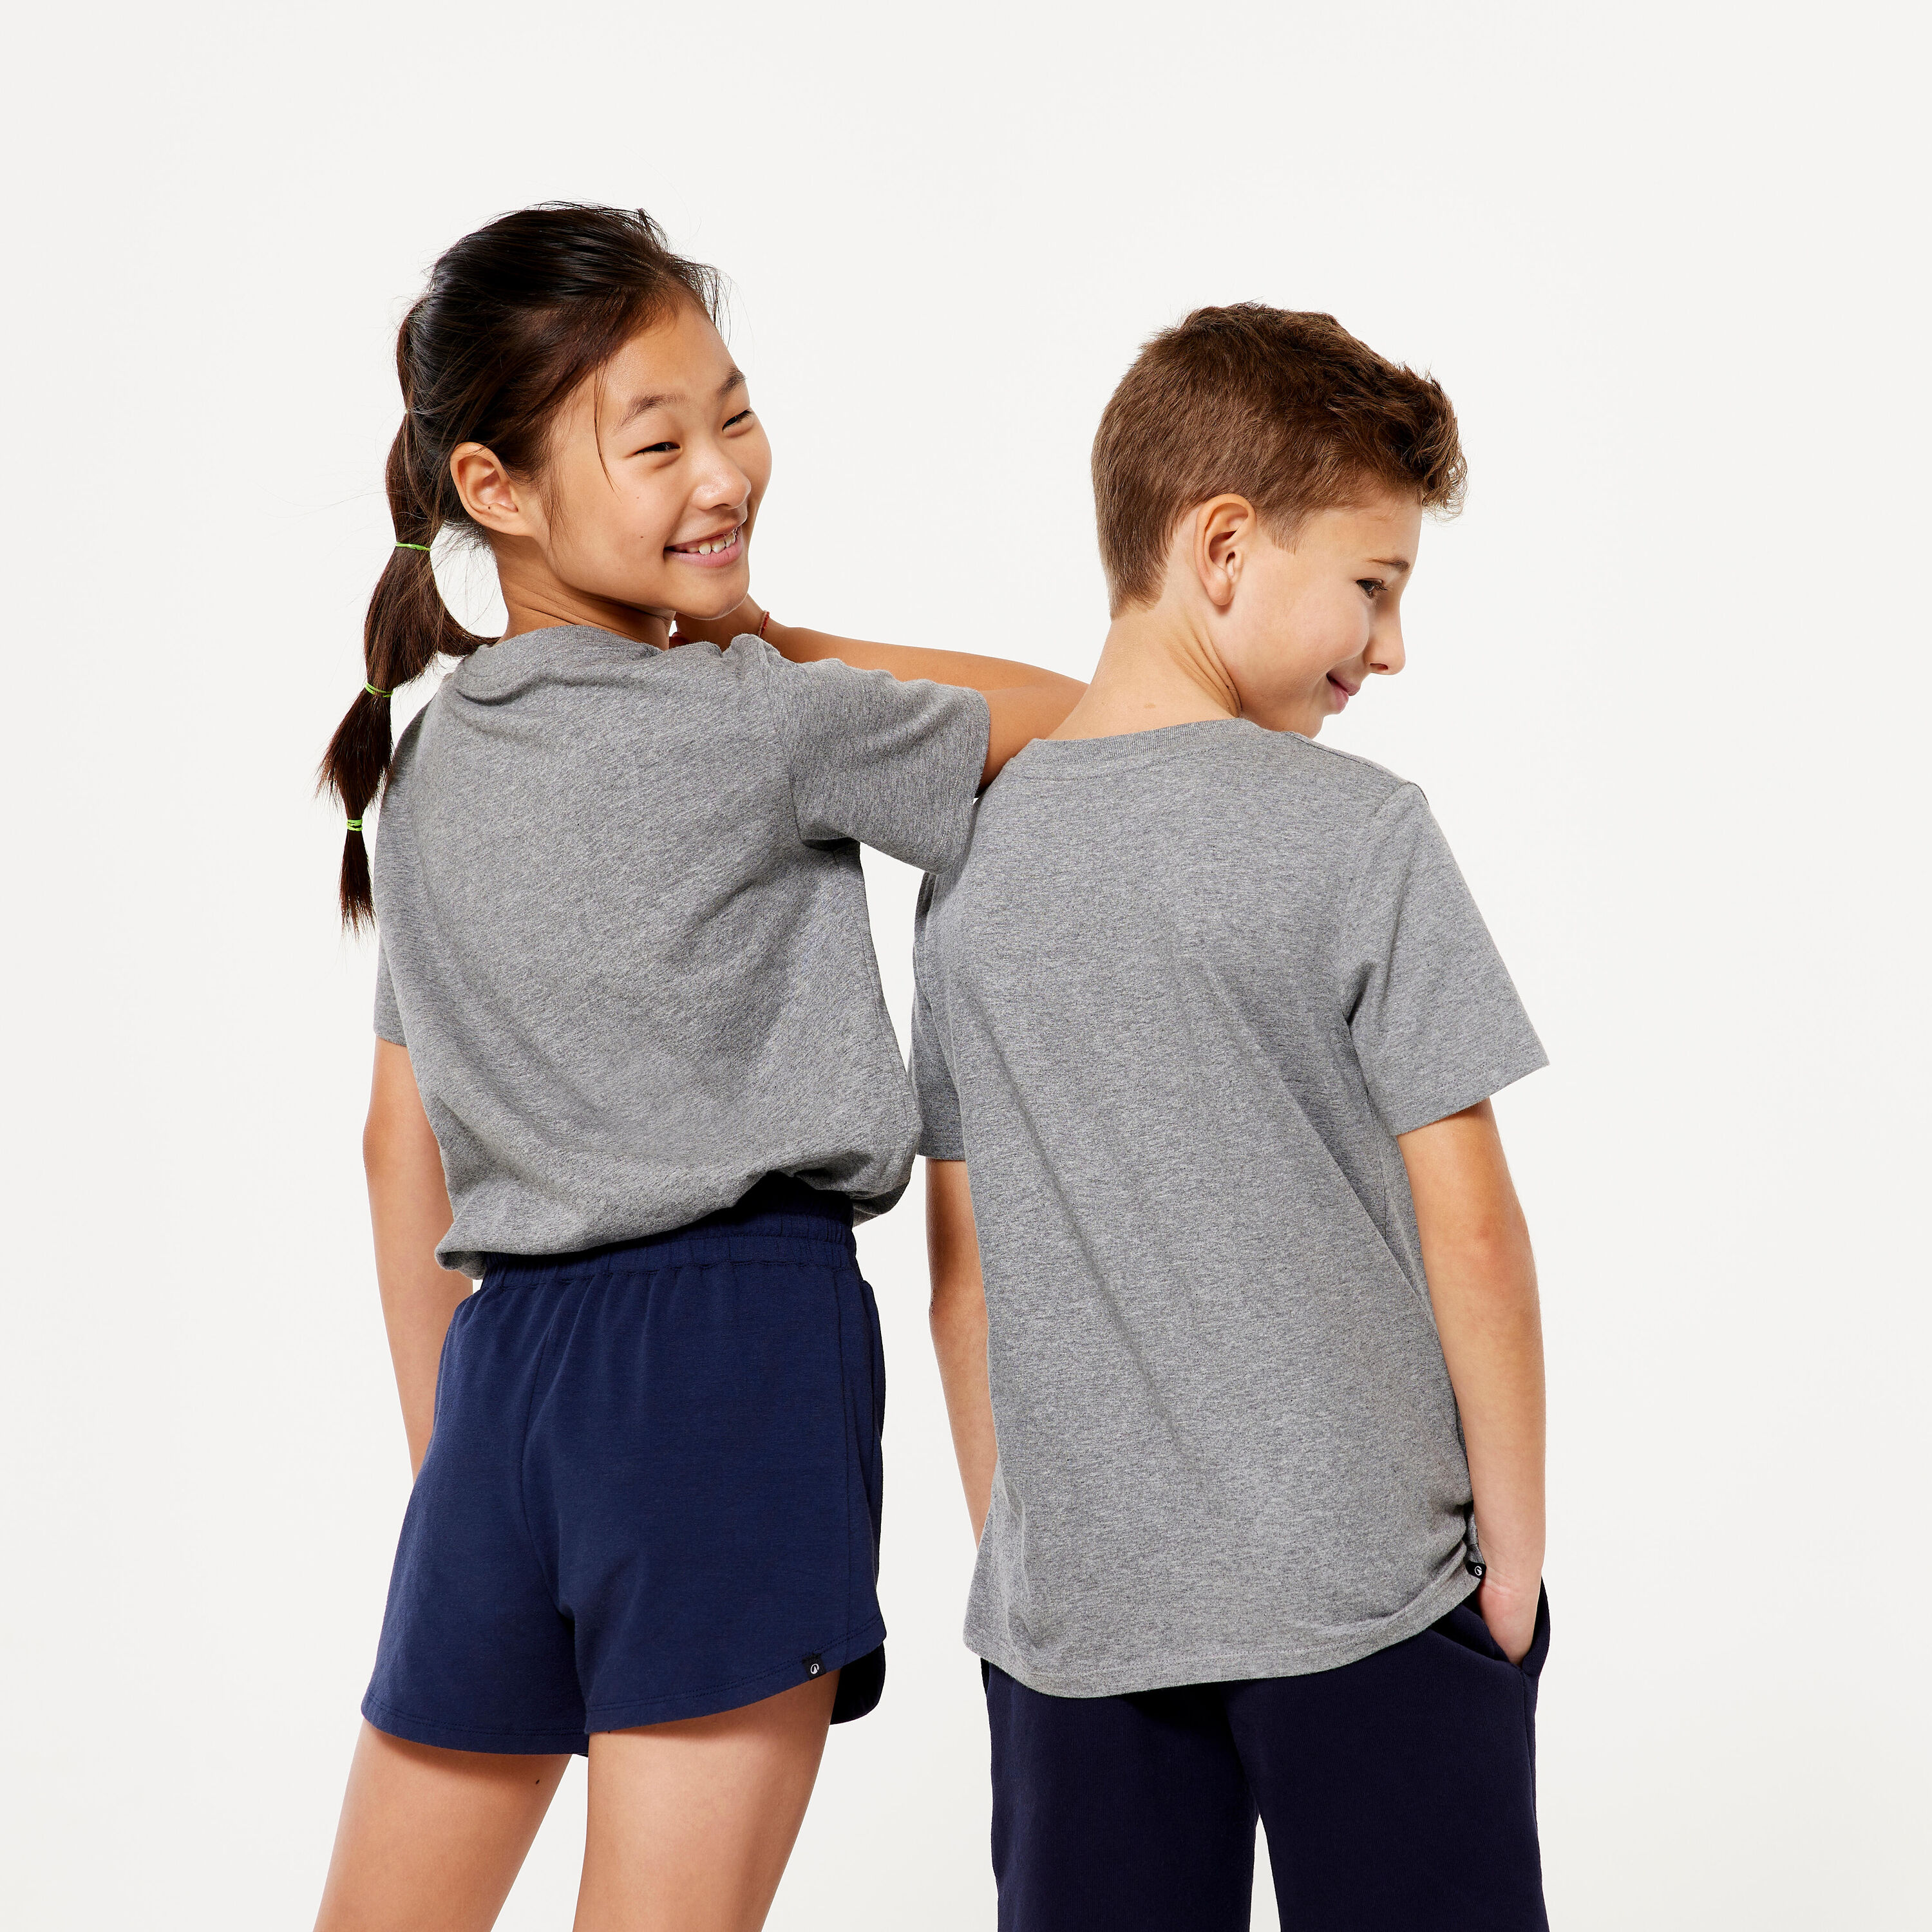 DOMYOS Kids' Unisex Cotton T-Shirt - Grey